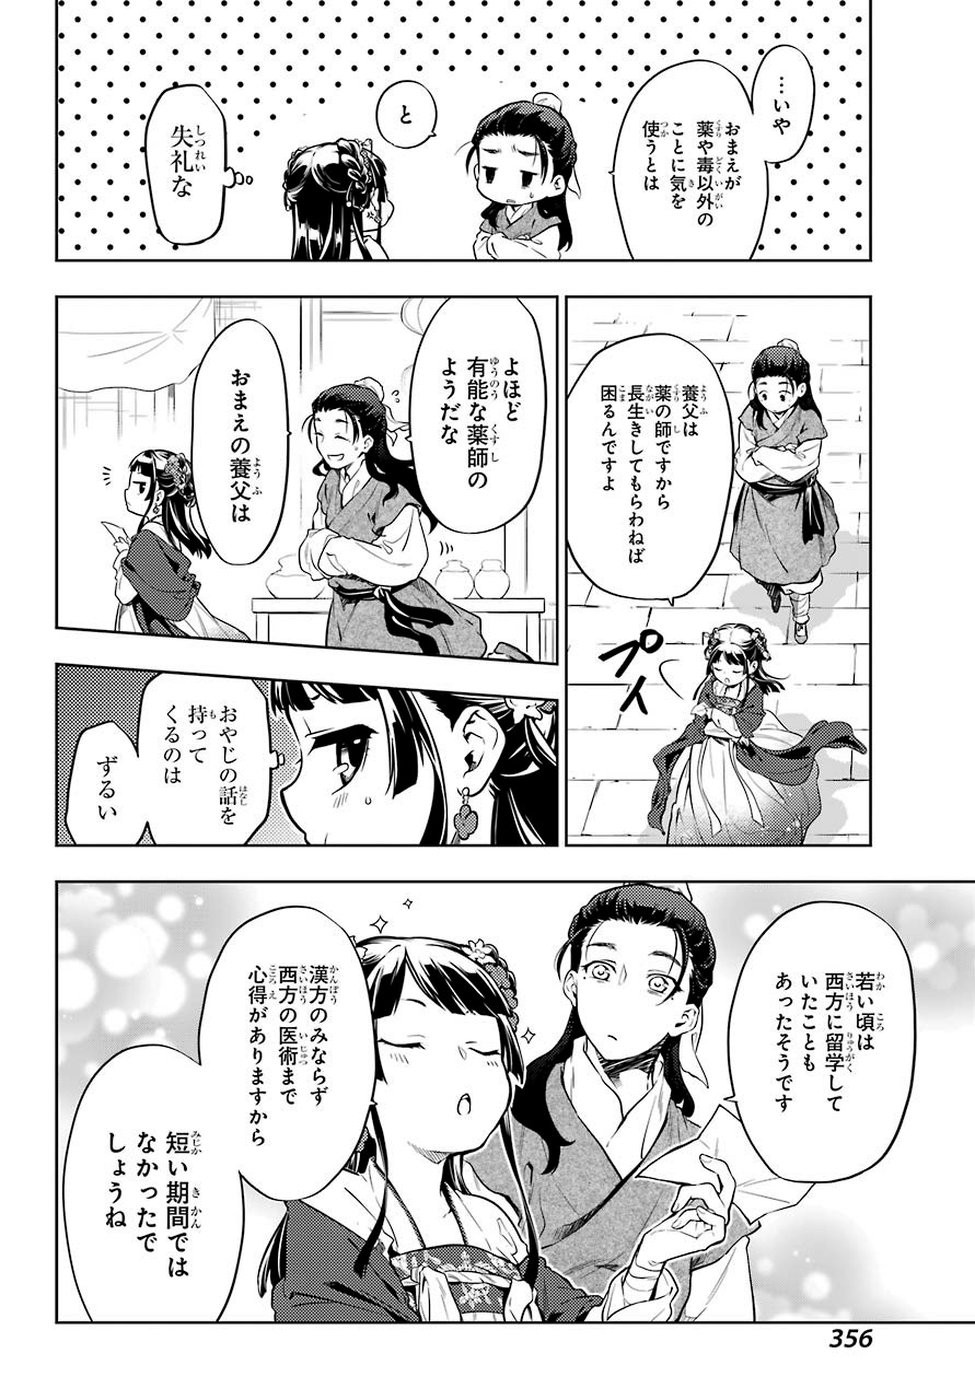 Kusuriya no Hitorigoto - Chapter 28-1 - Page 4